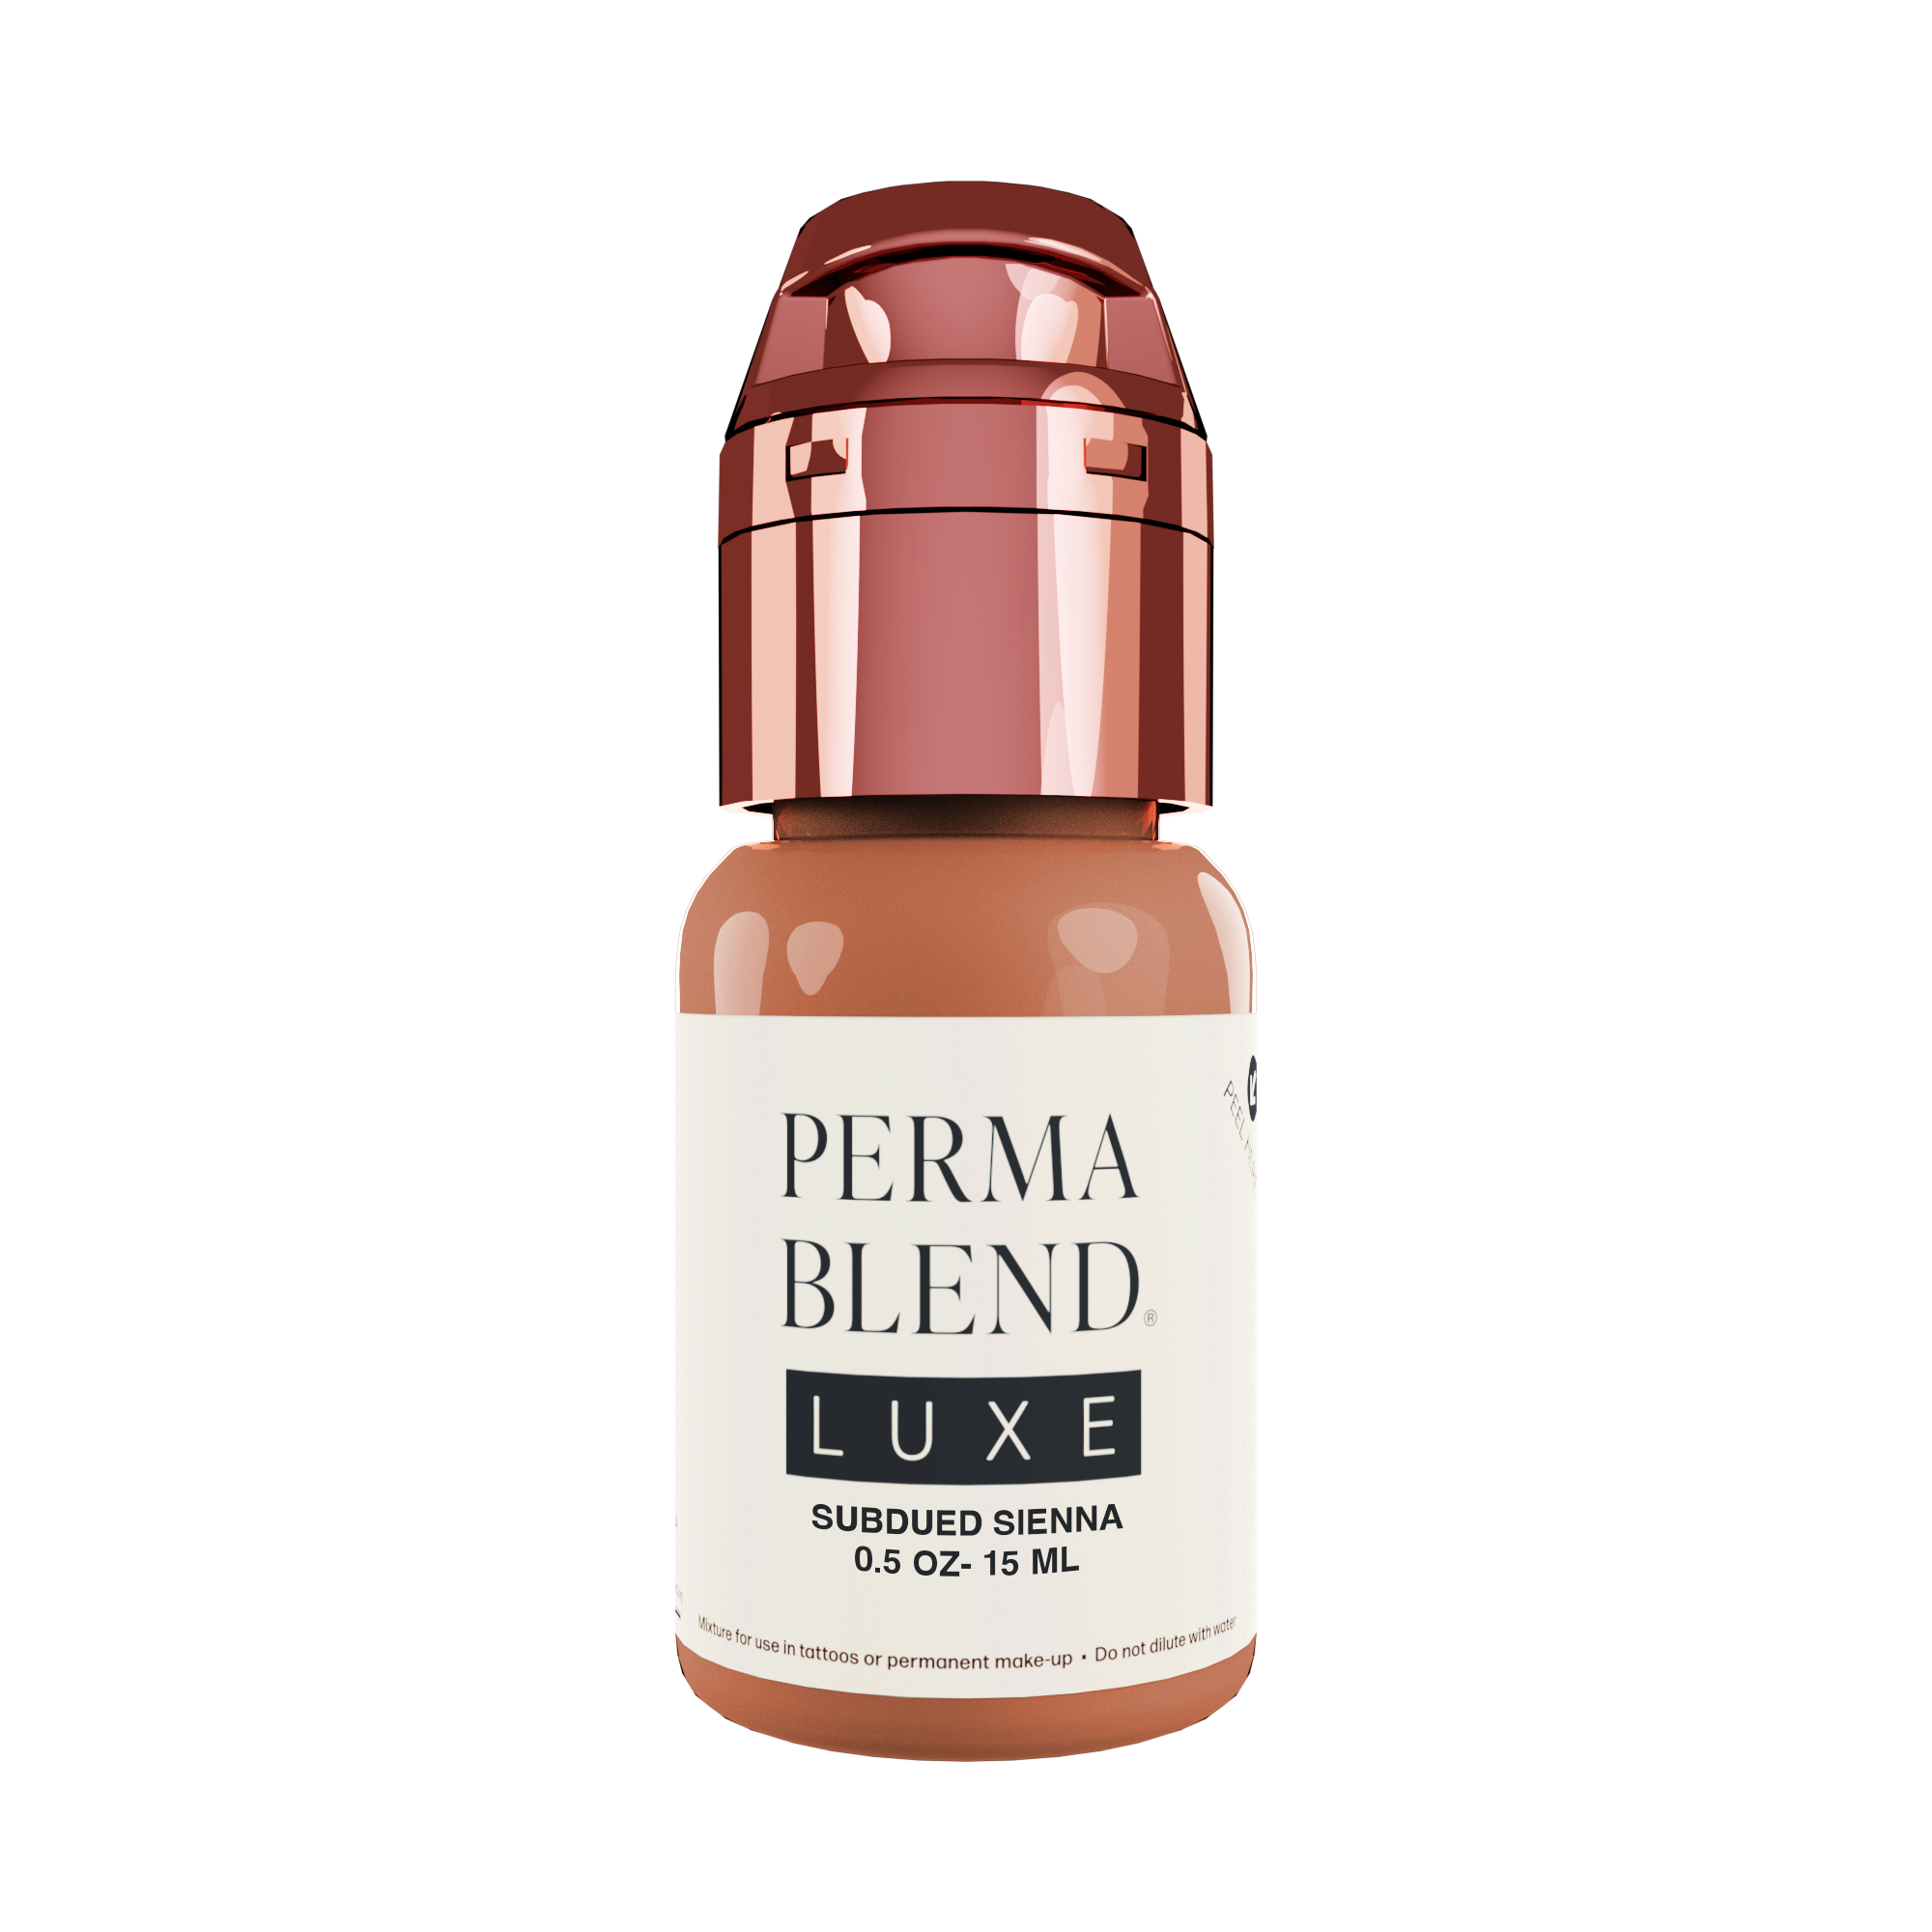 Perma Blend Luxe - SUBDUED SIENNA - pigmento per le labbra 15ml